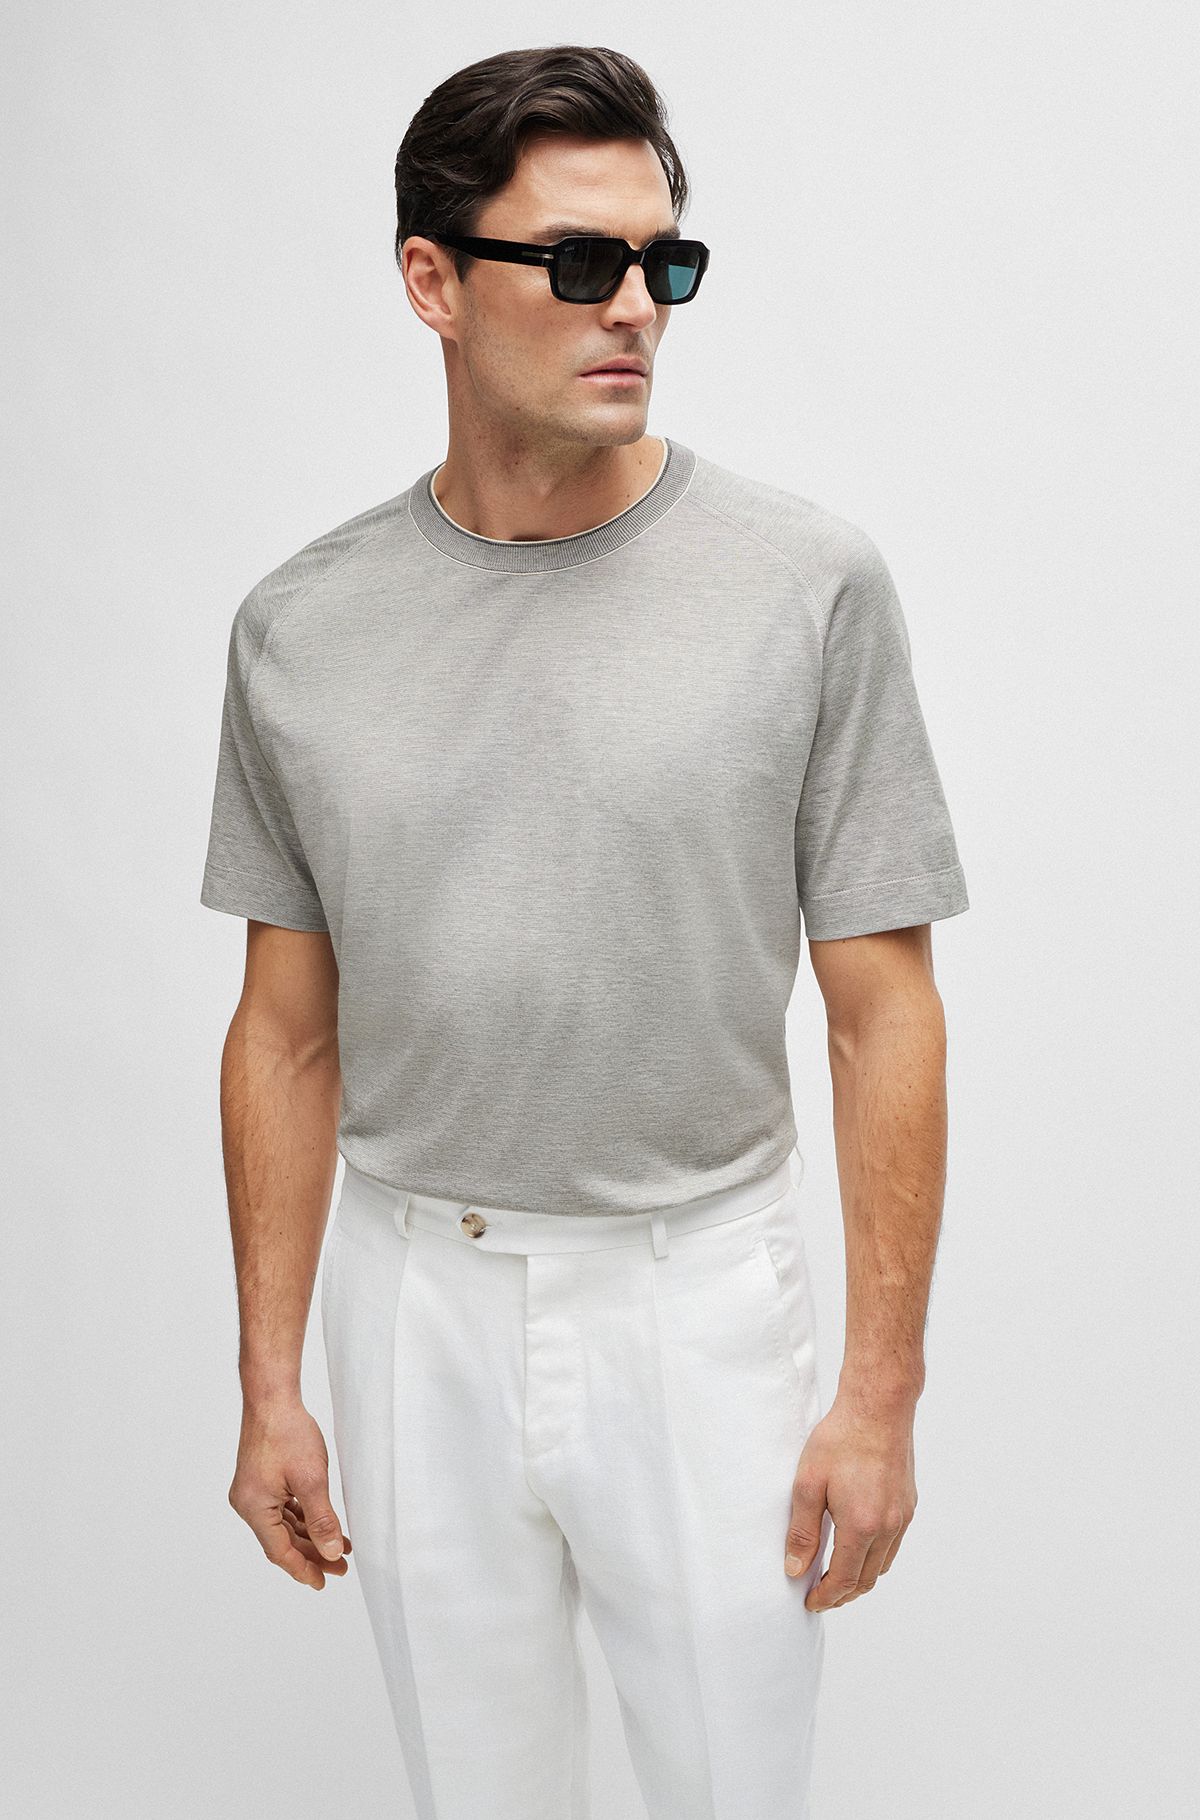 Stylish Grey T-Shirts for Men by HUGO BOSS | BOSS Men